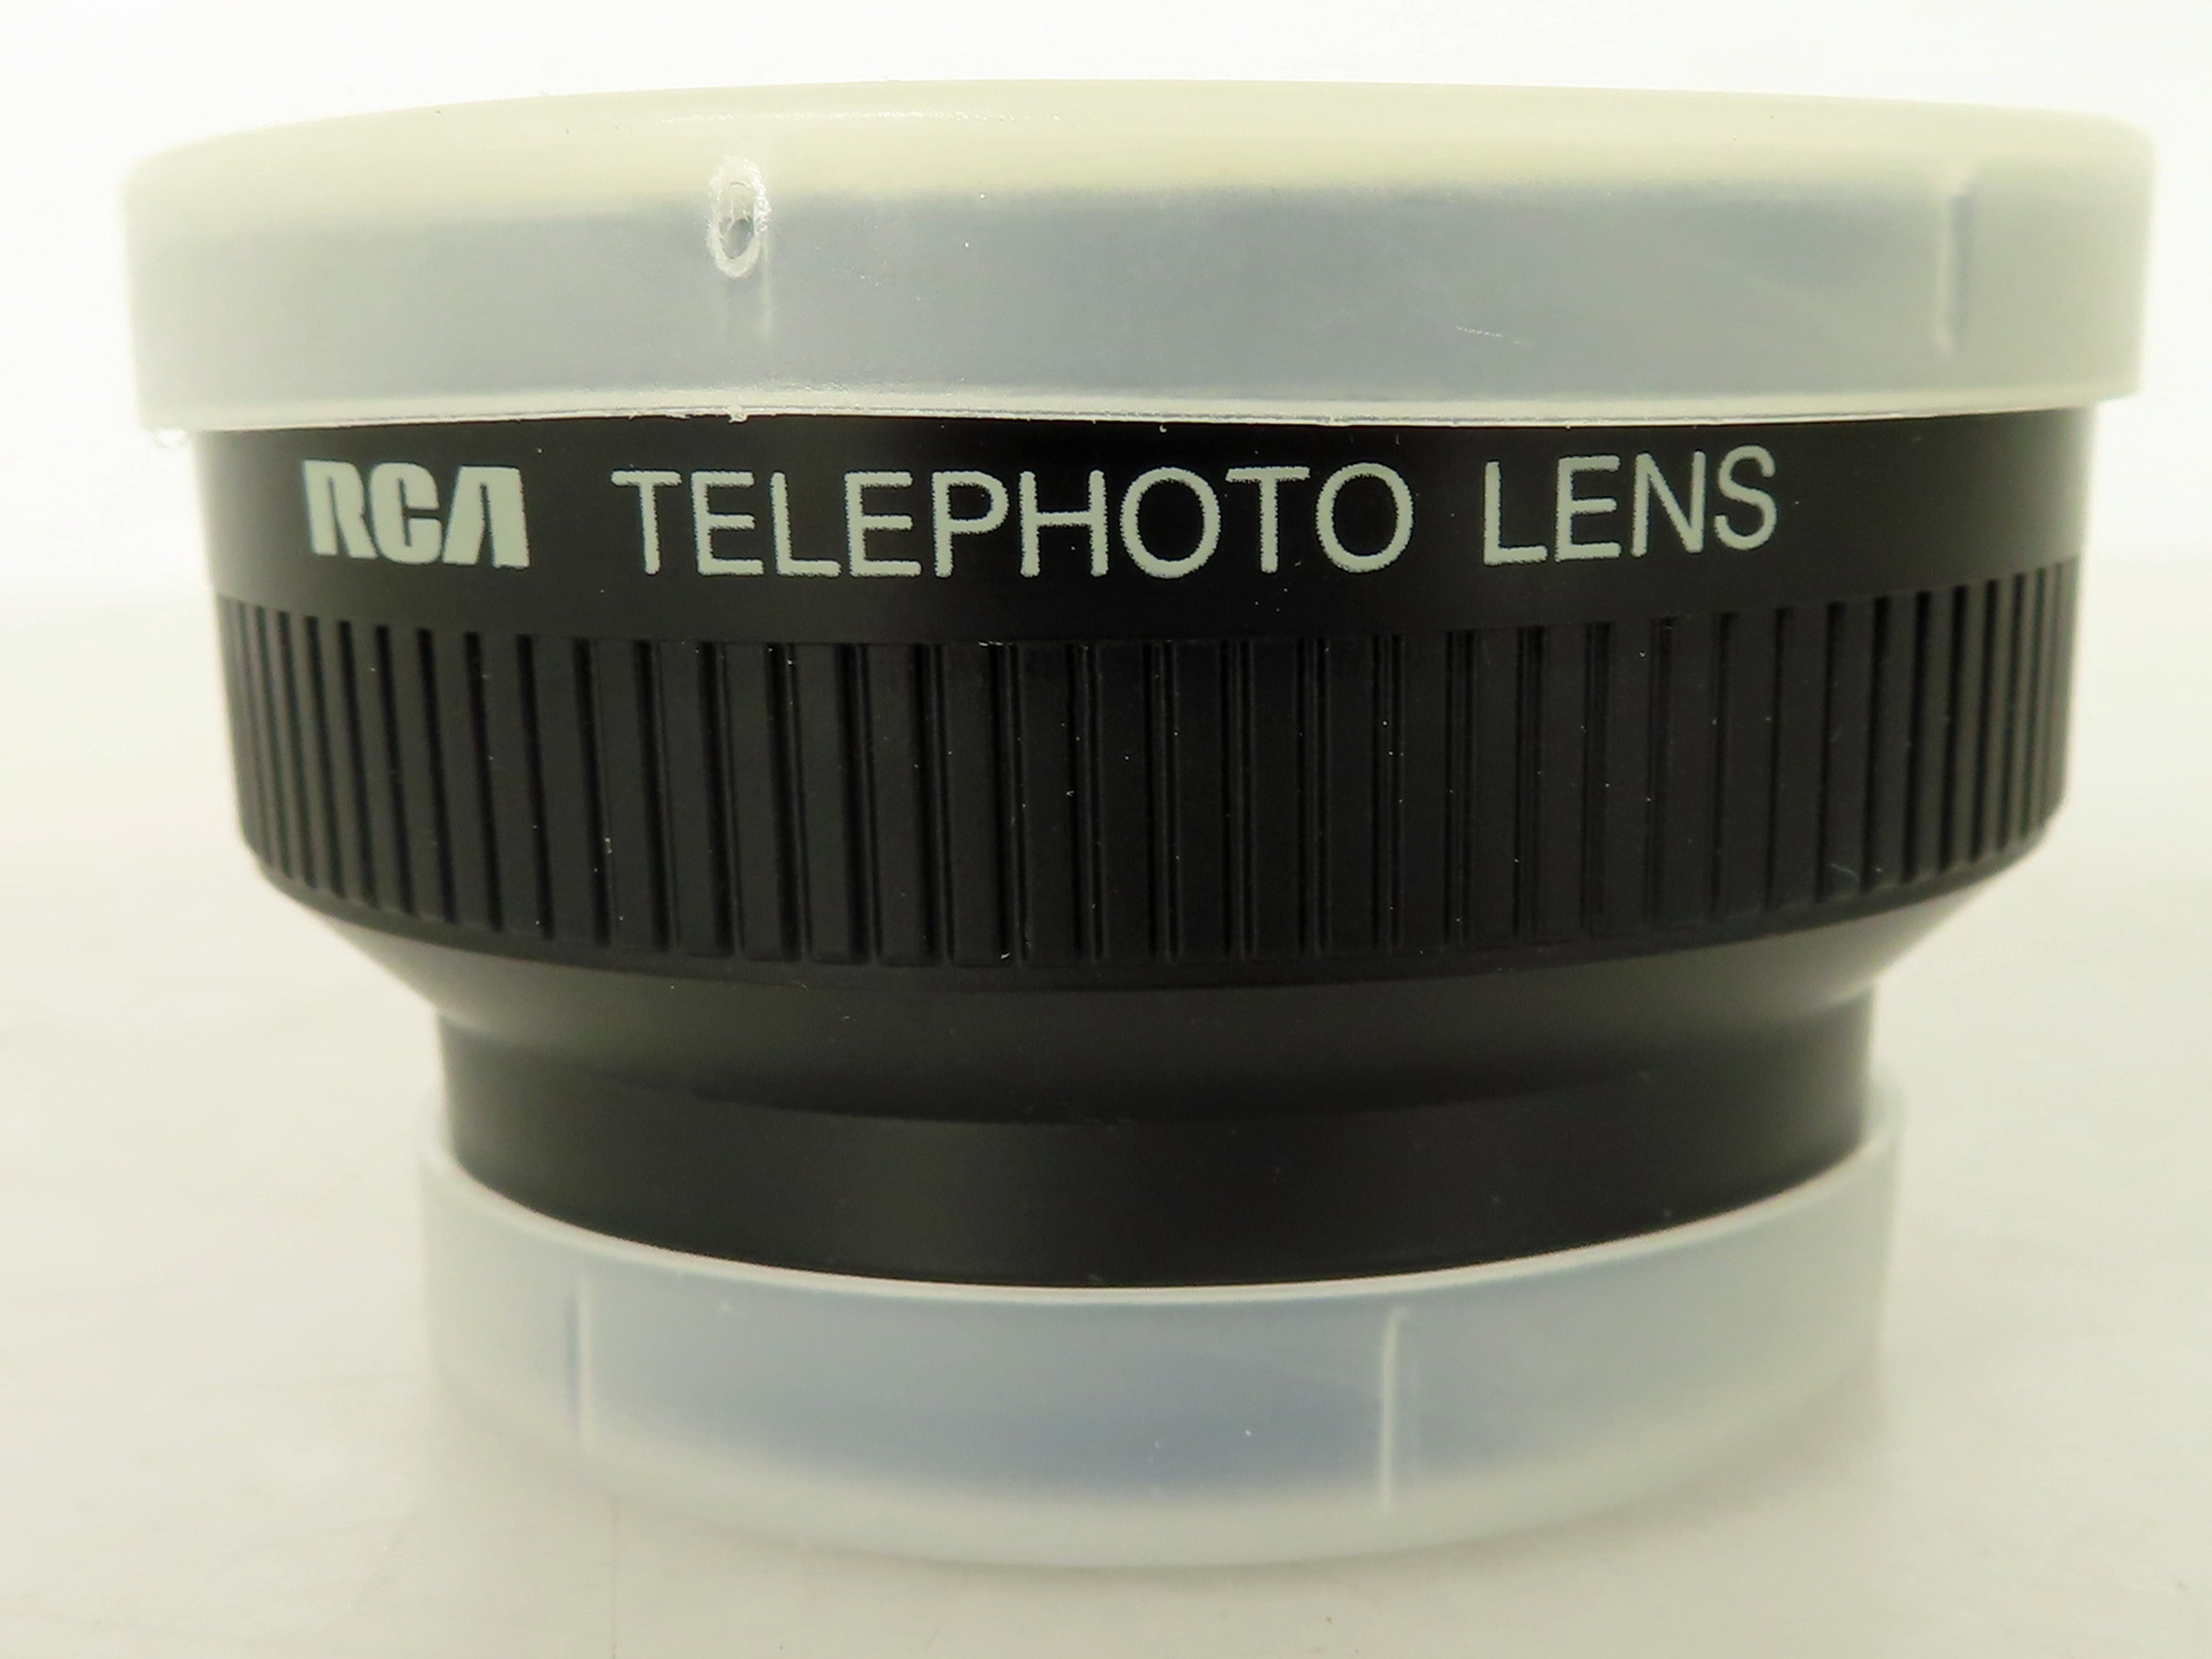 RCA Telephoto Lens w/ Caps & Protective Case